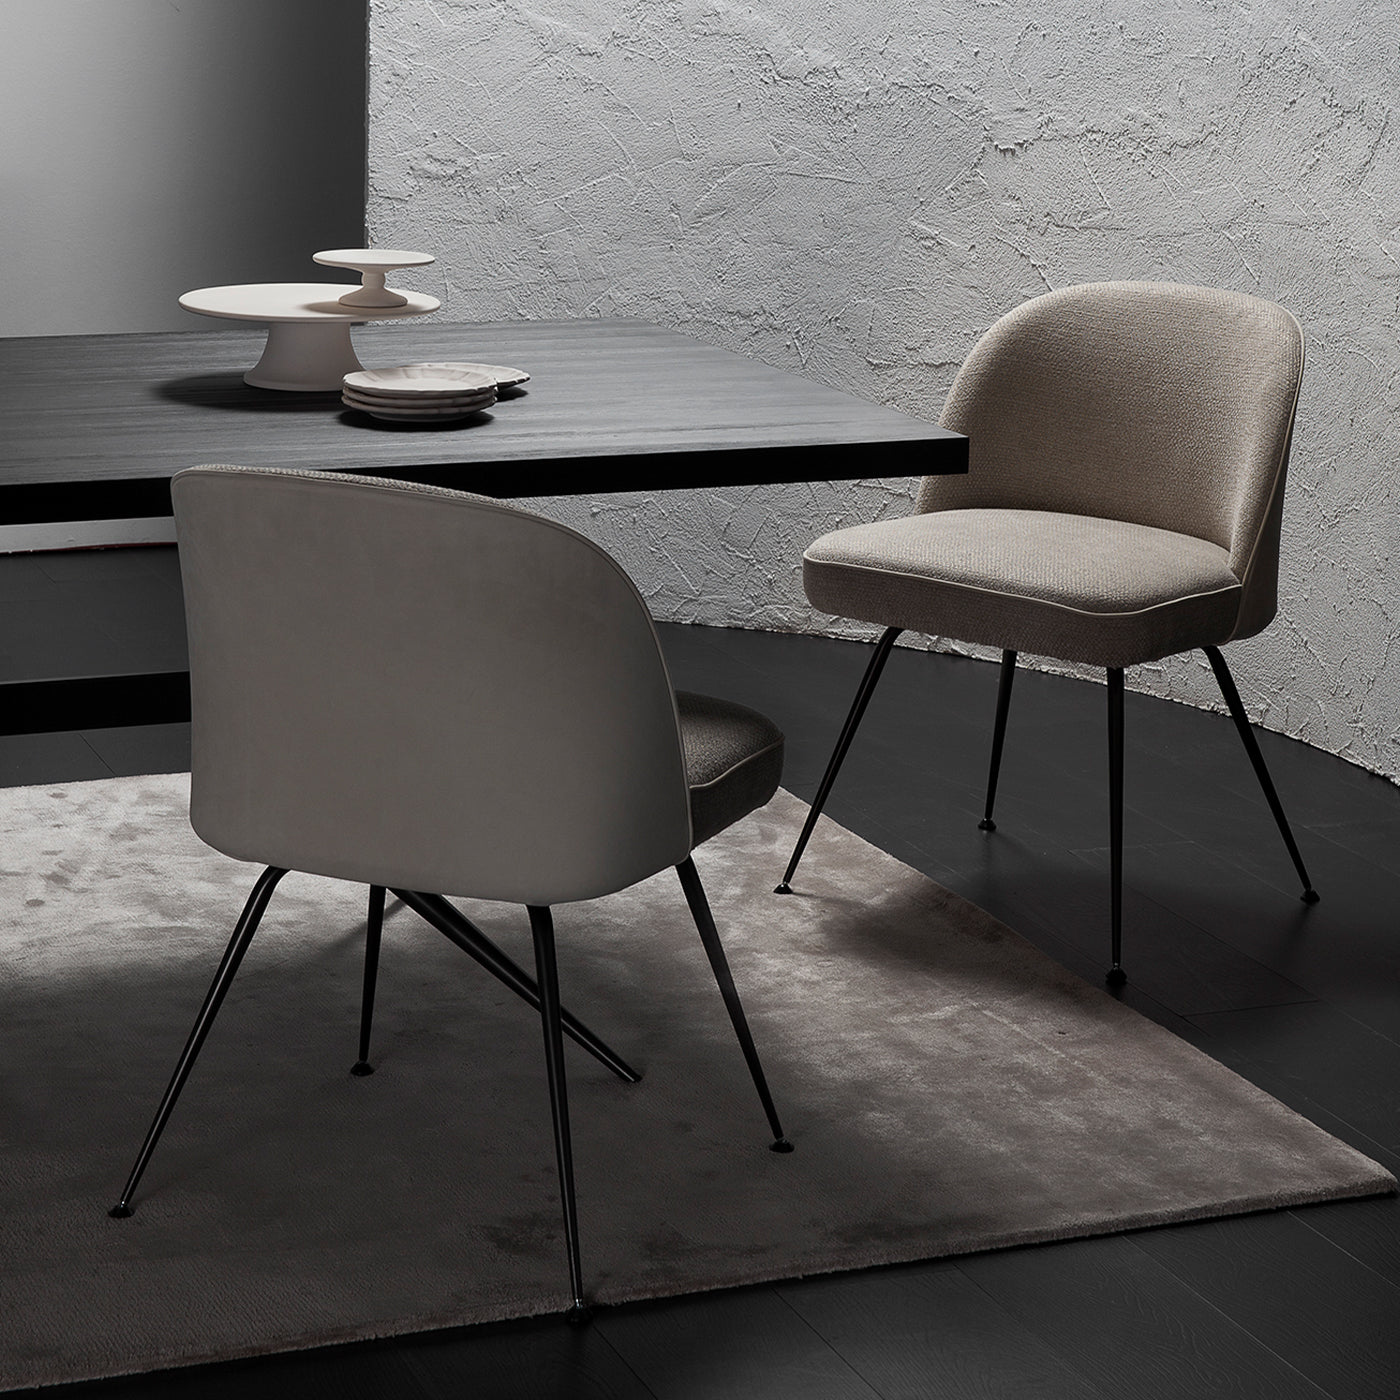 Like 1400 Gray Chair by Gianluigi Landoni - Alternative view 4